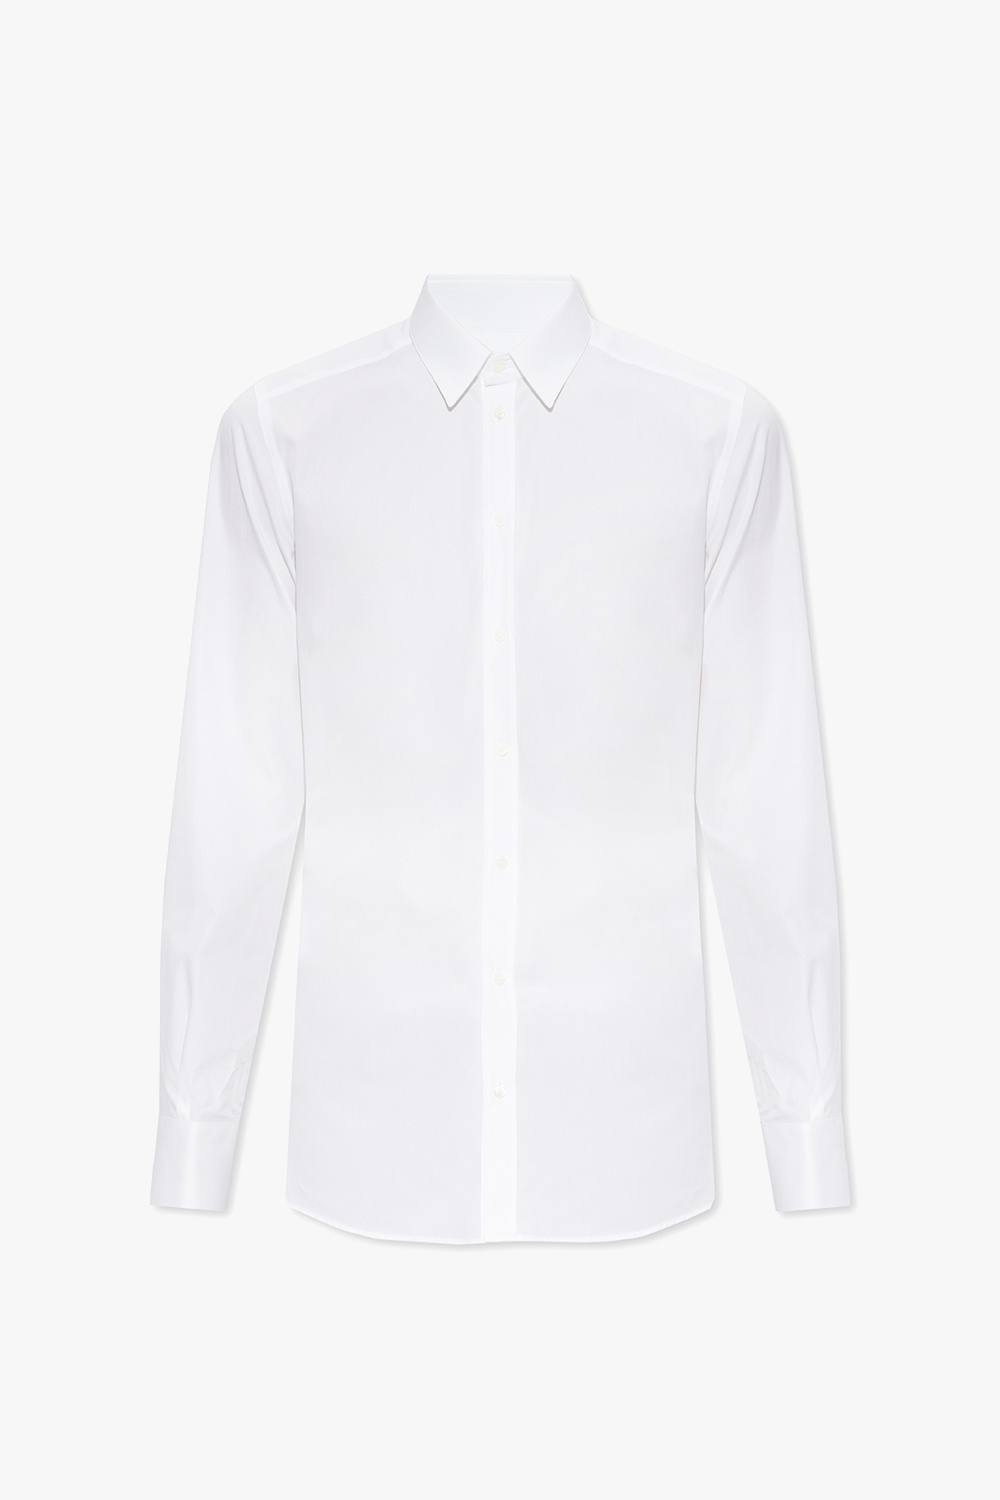 Dolce & Gabbana Fitted shirt